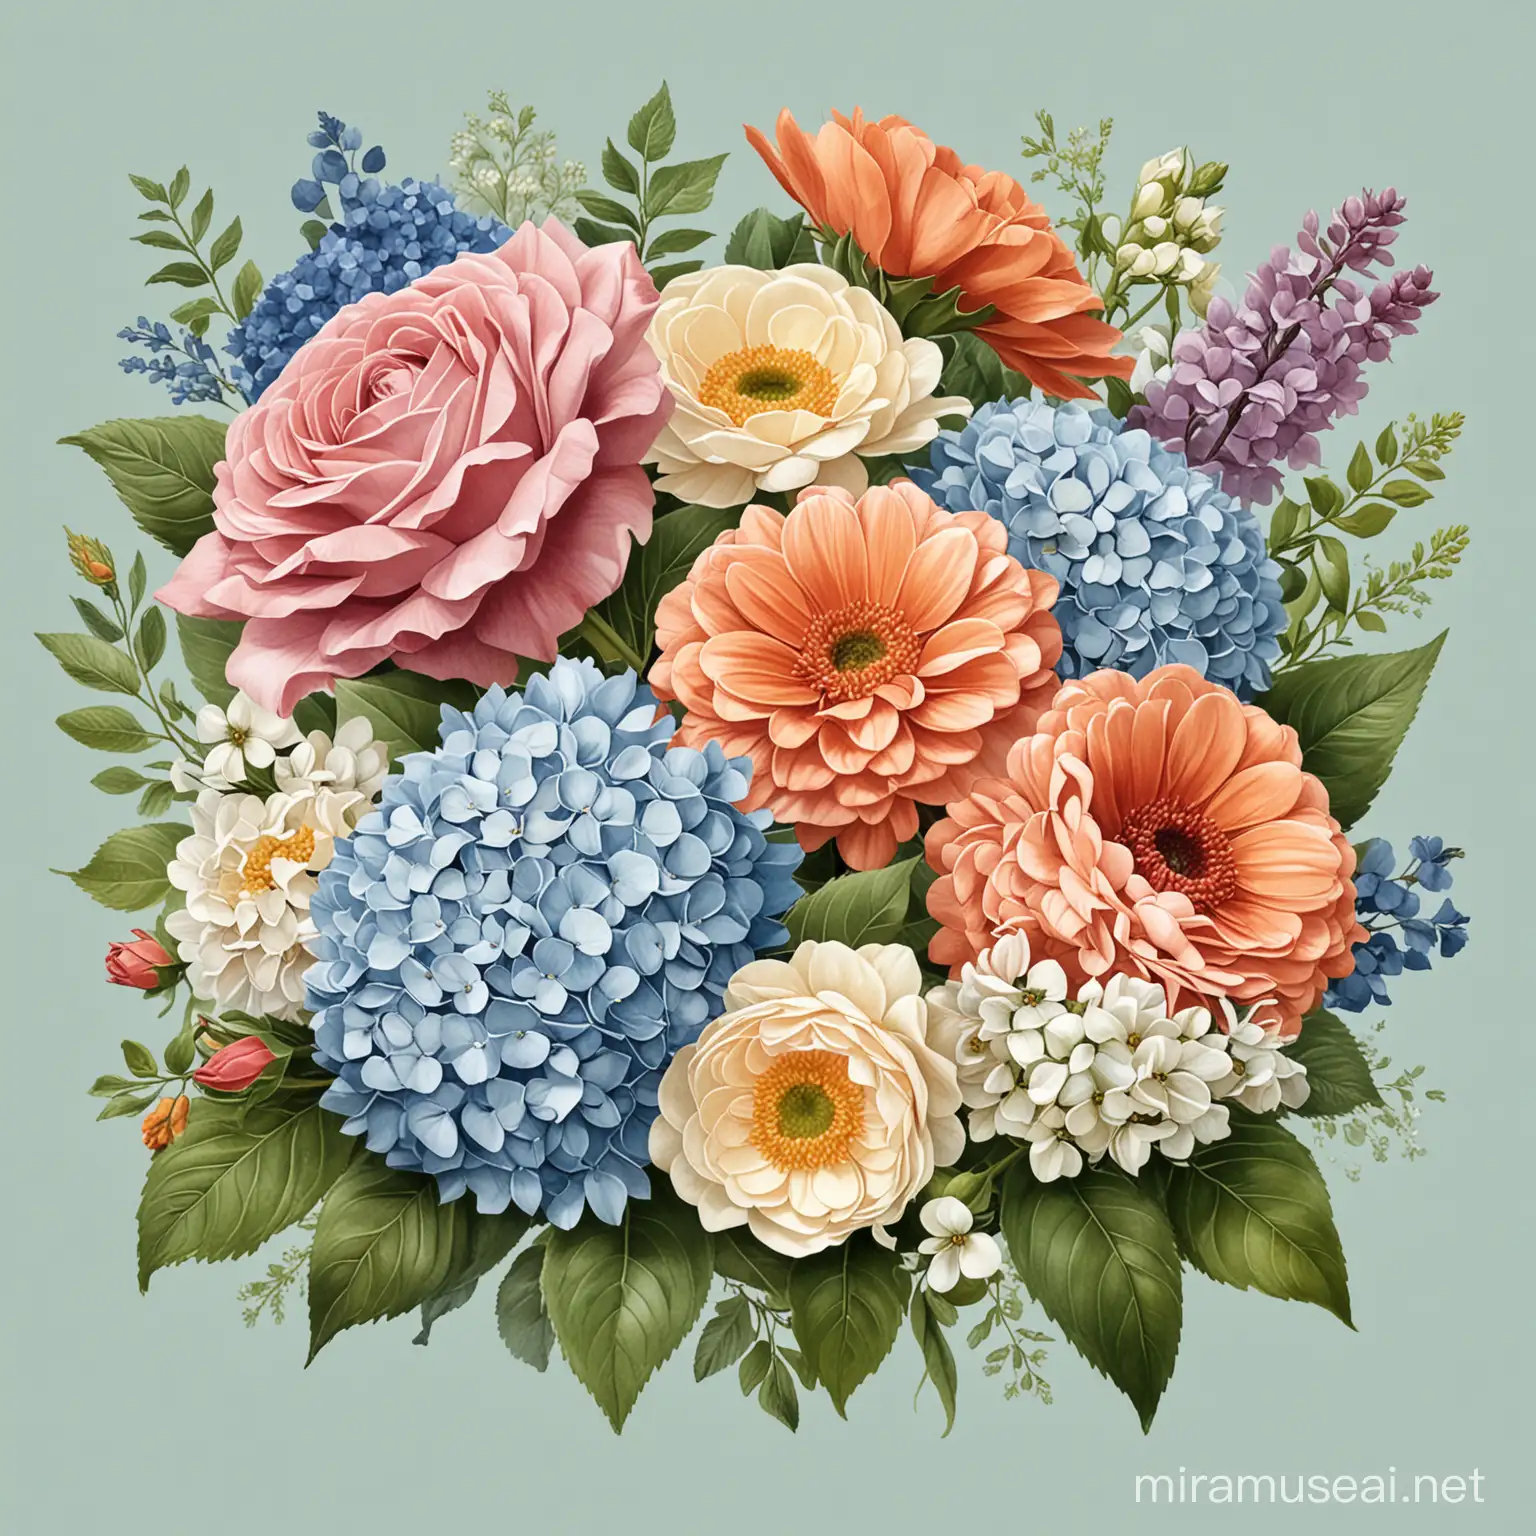 Roses, hydrangeas,Astros,gerberas,spring roses  florals arrangements illustration